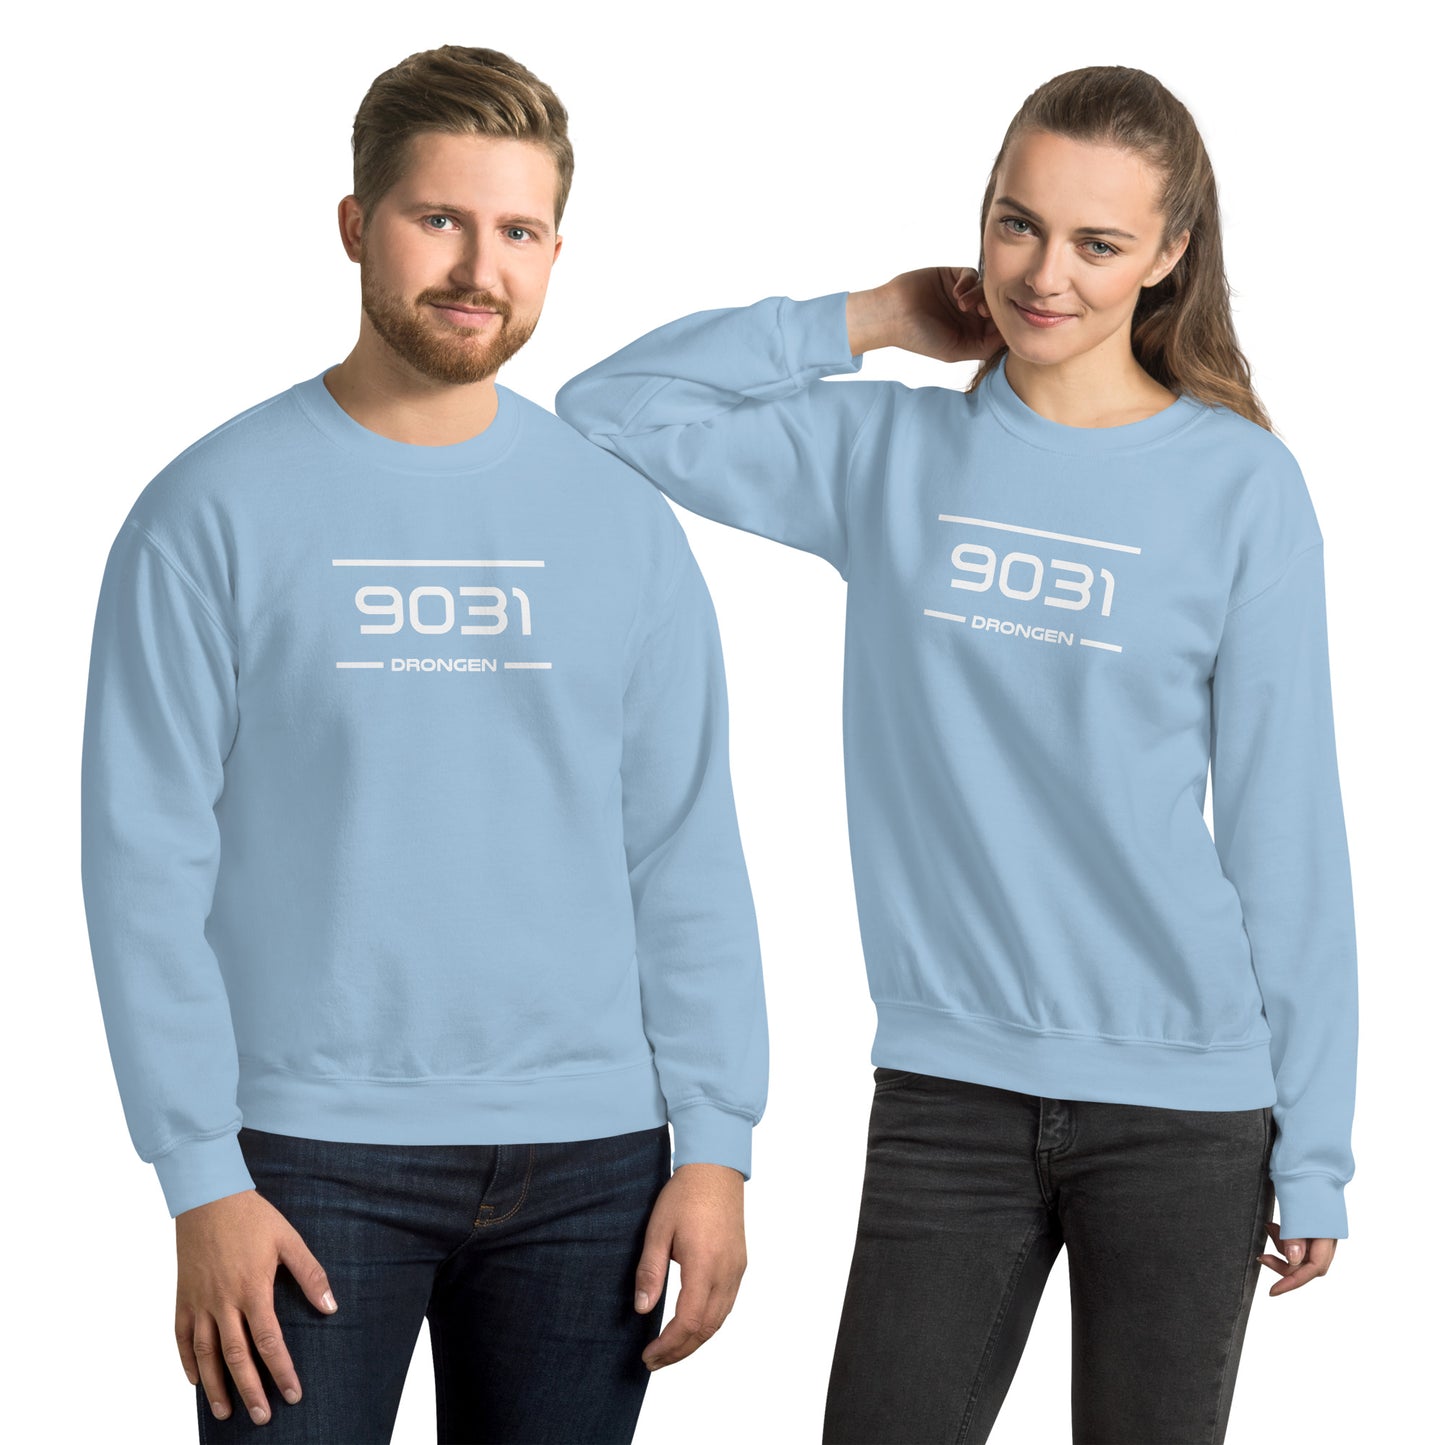 Sweater - 9031 - Drongen